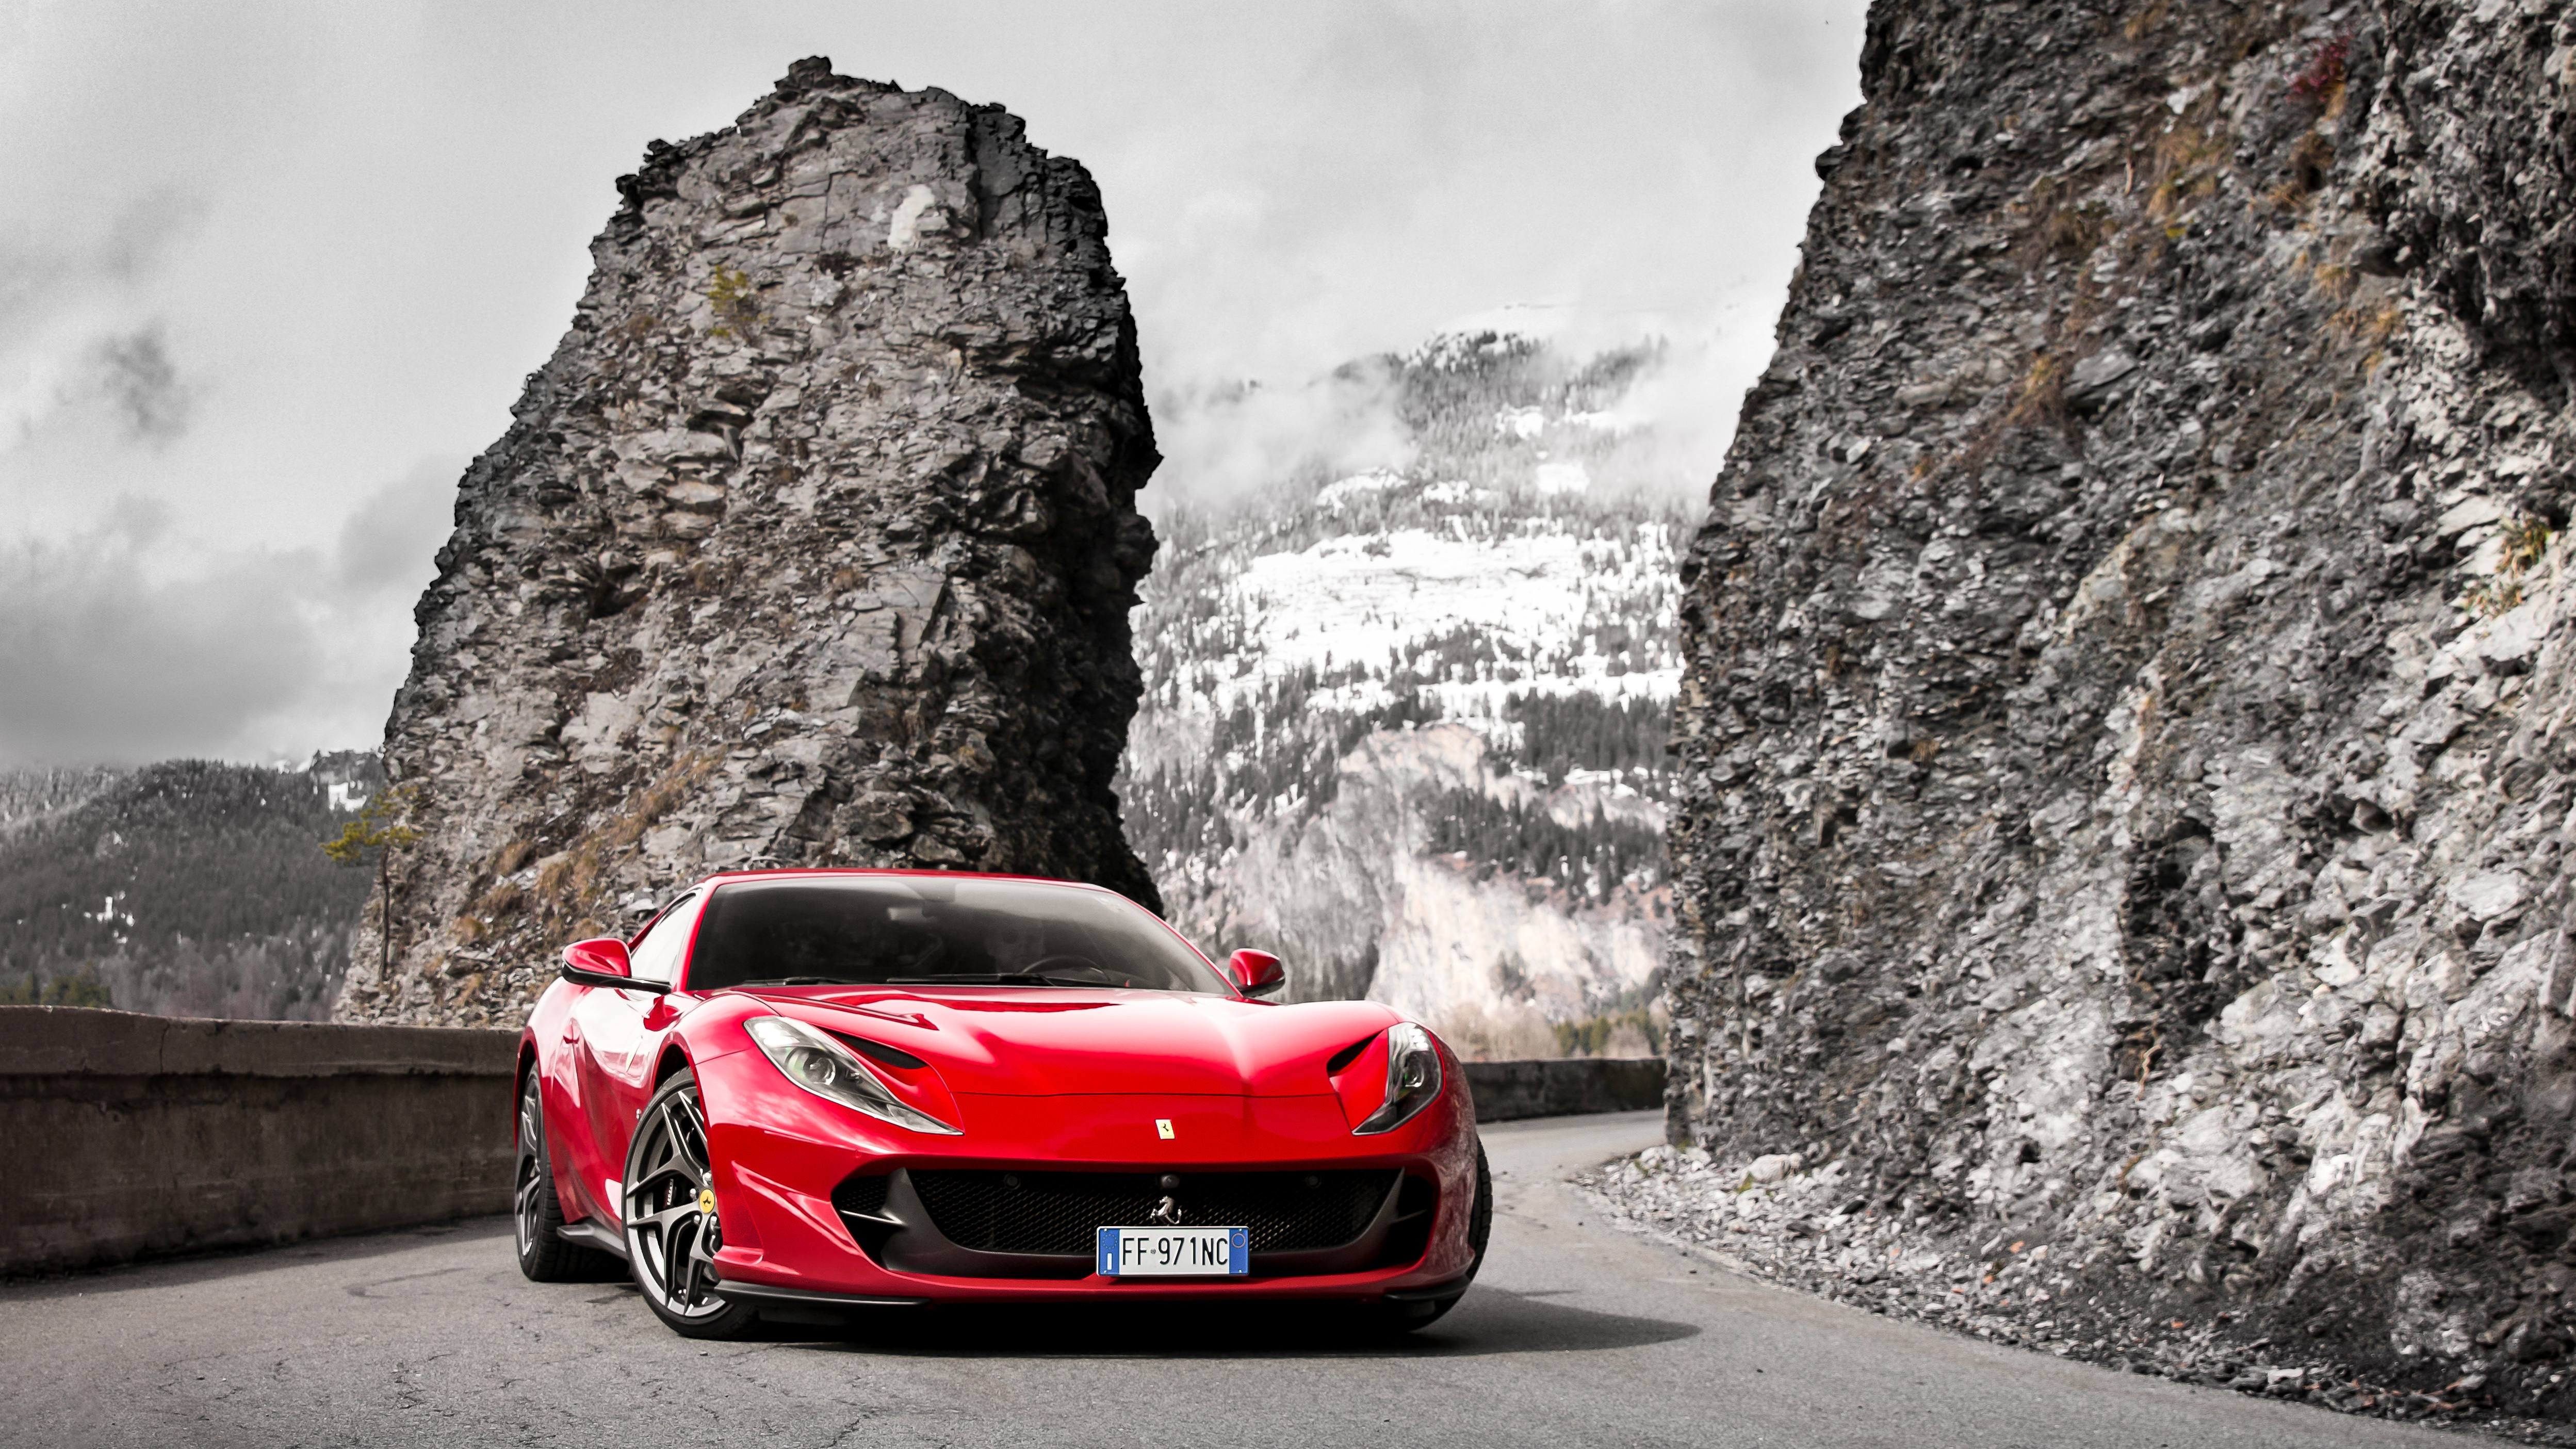 Ferrari Superfast 4k Ultra HD Wallpaper Background Image